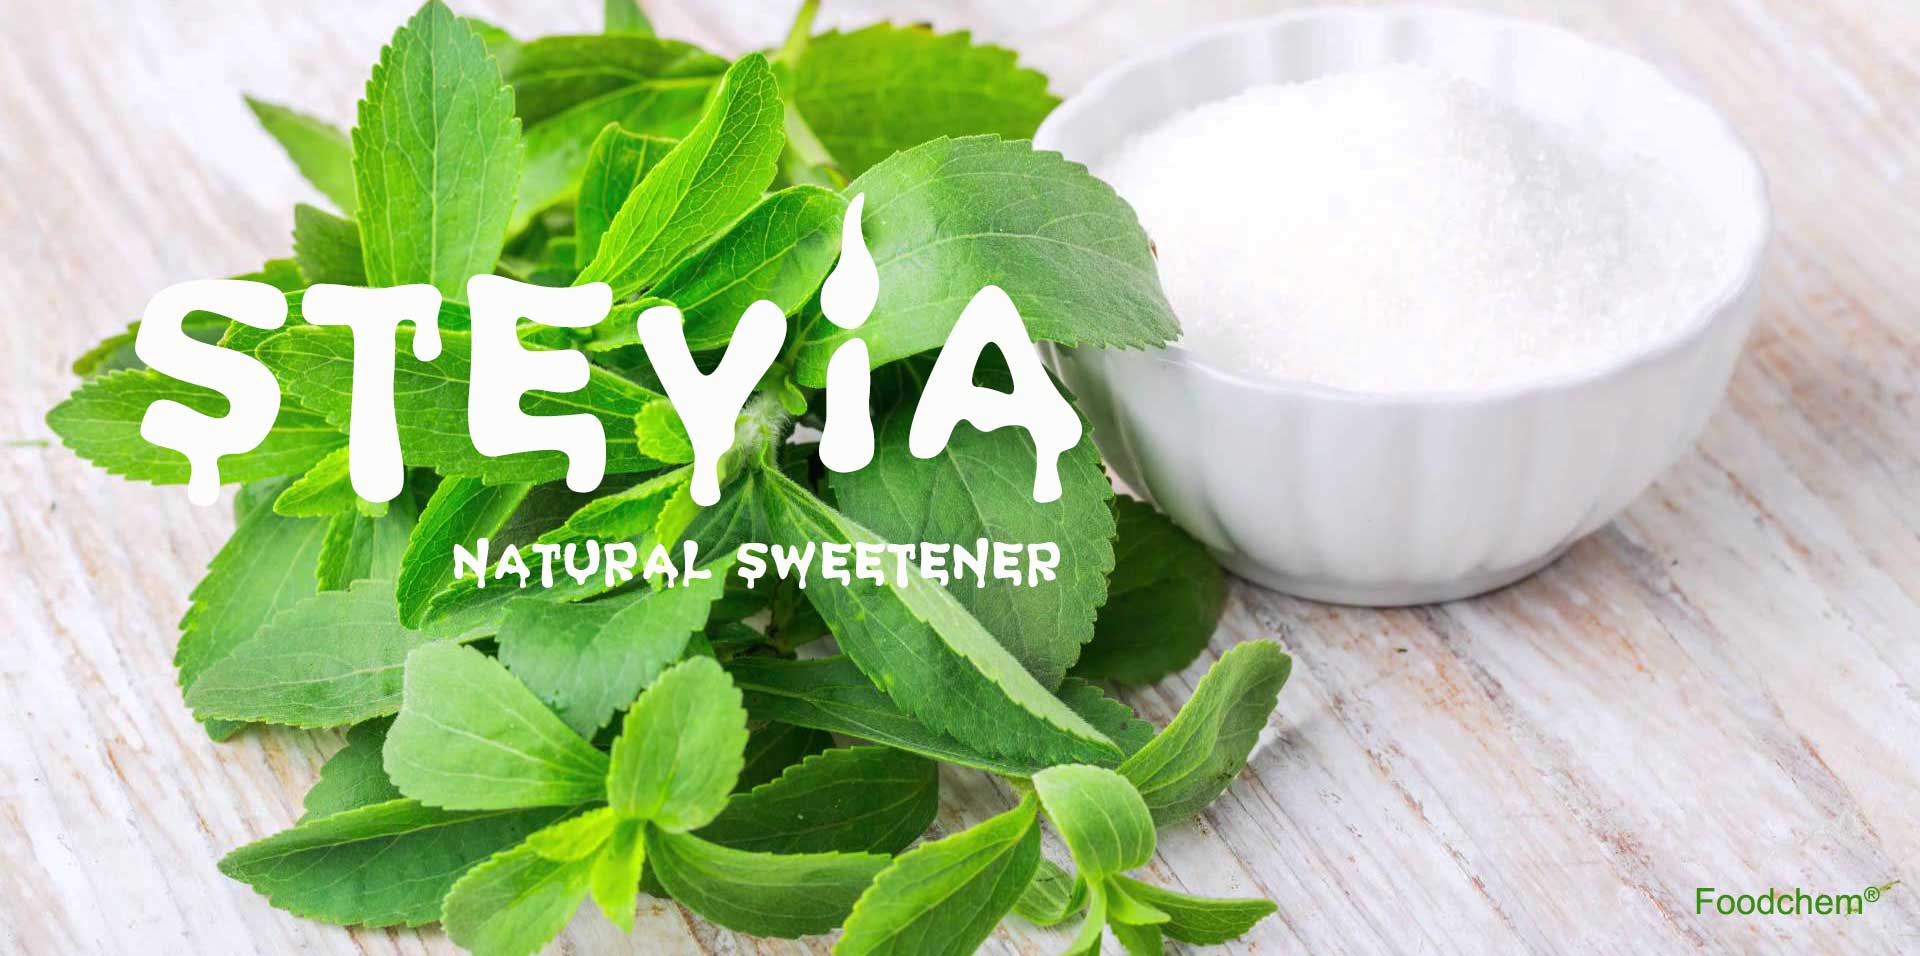 Natural sweetener stevia supplier